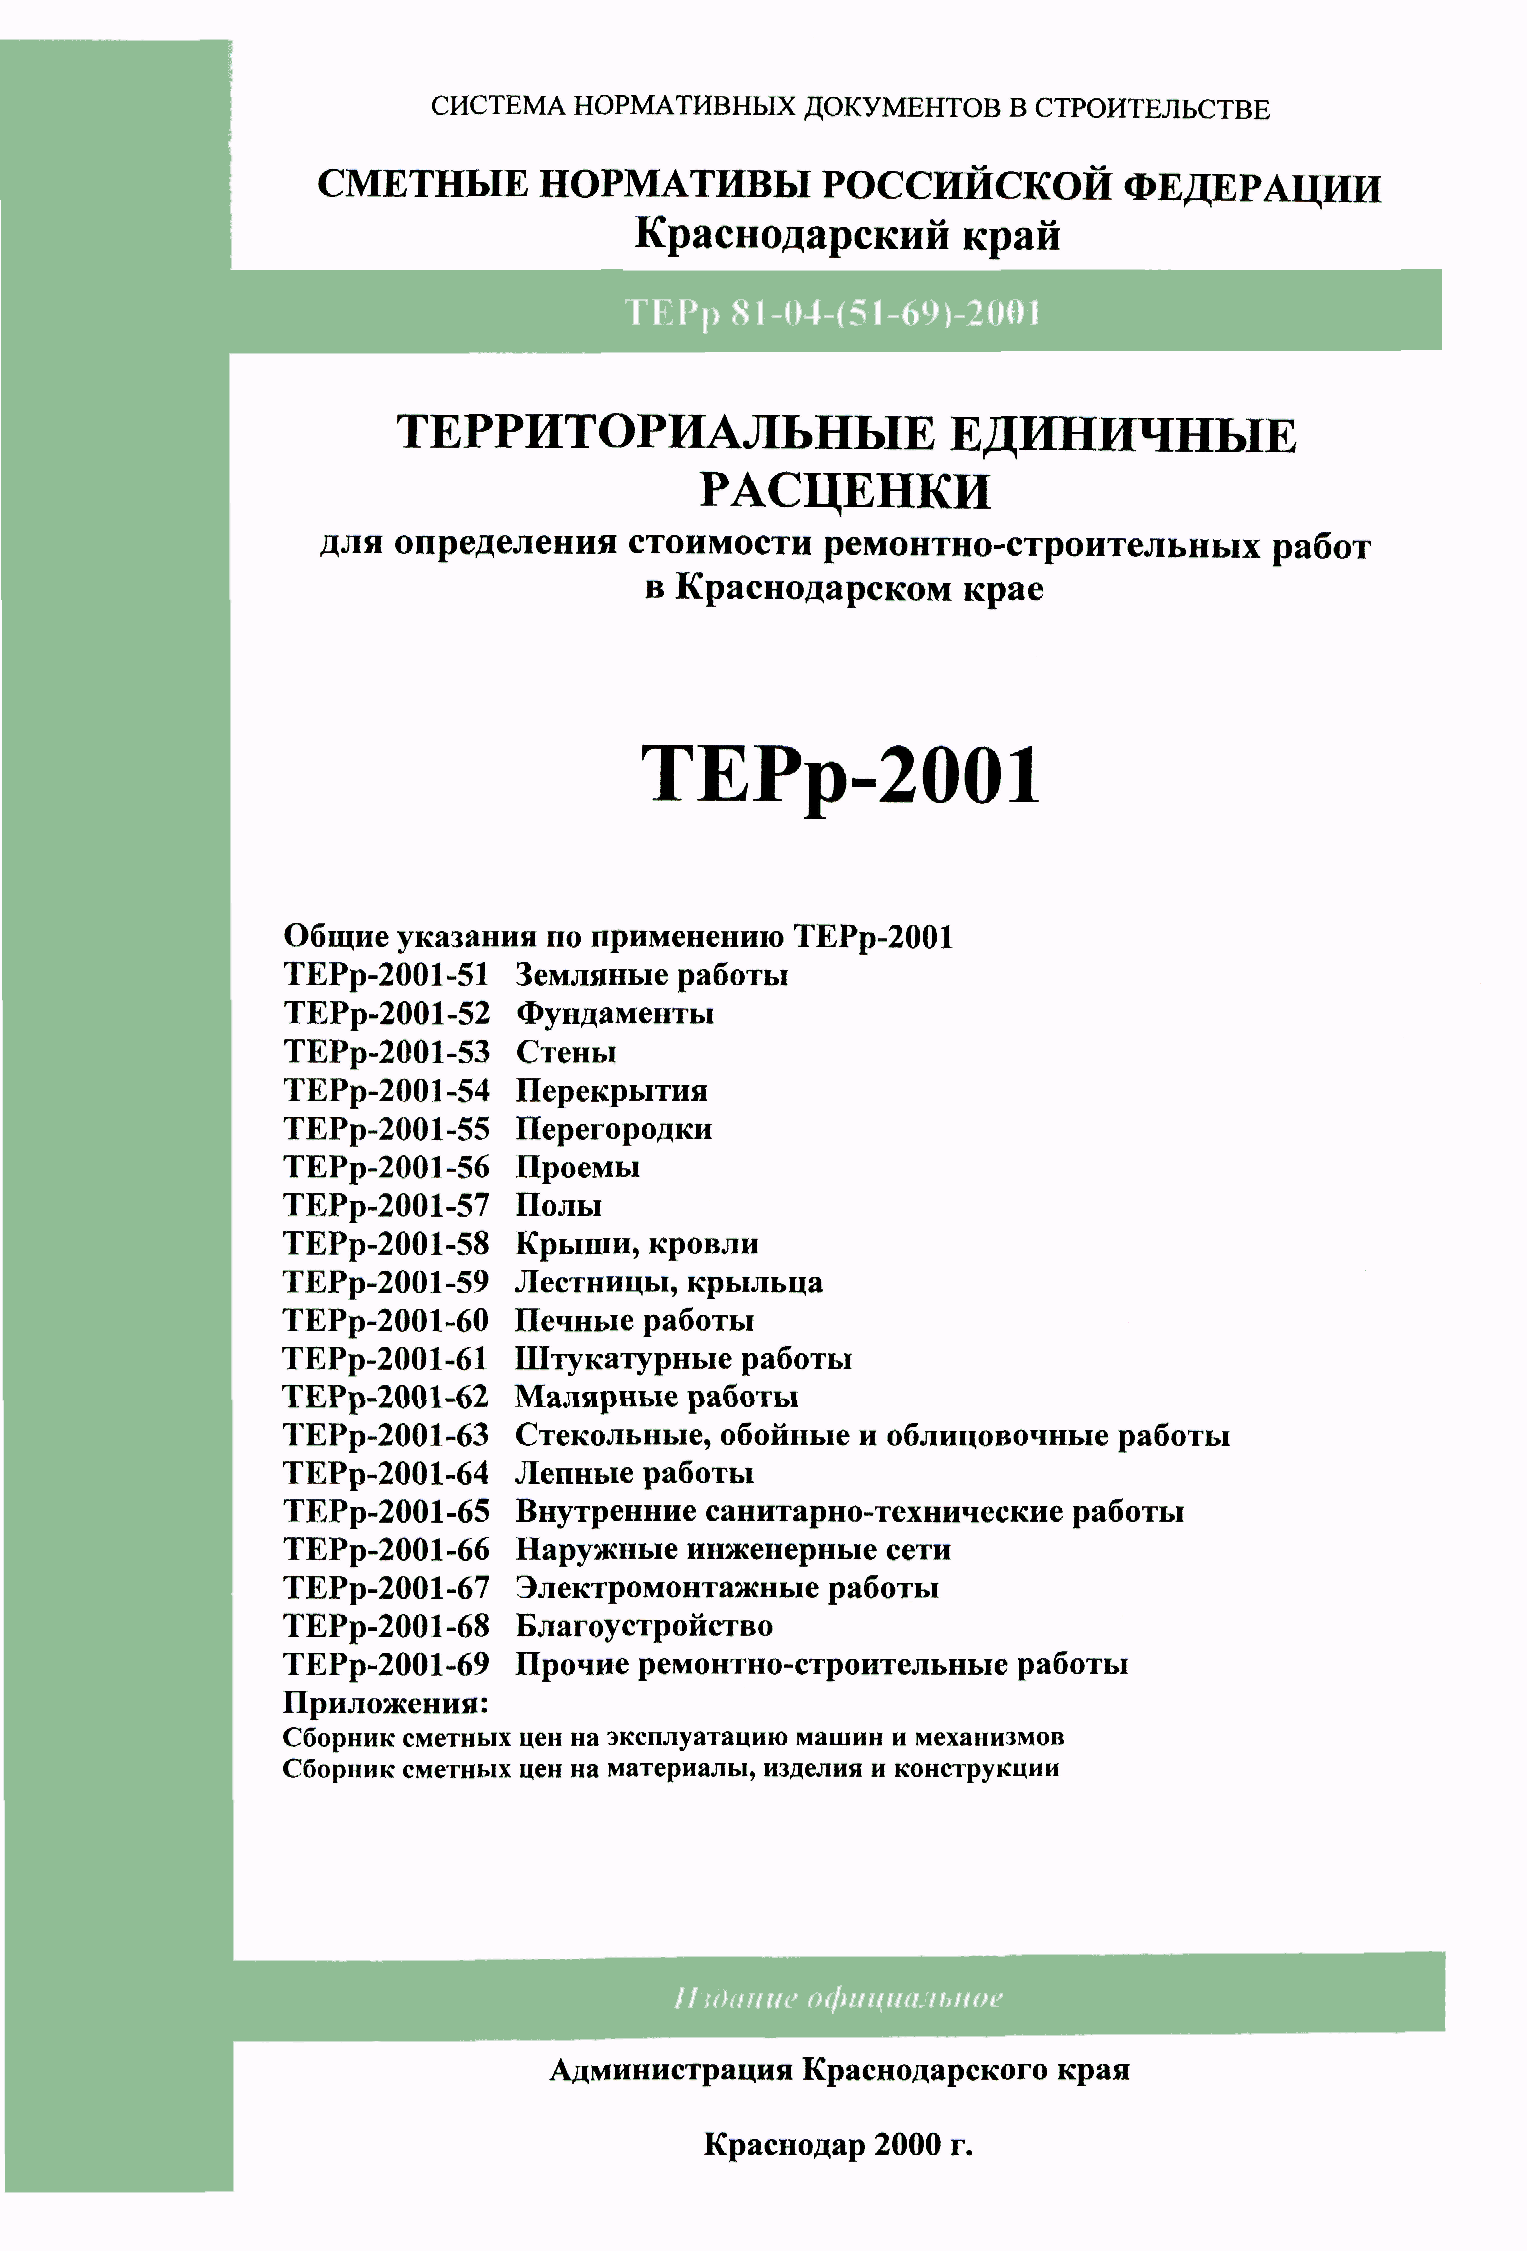 ТЕРр Краснодарский край 2001-65